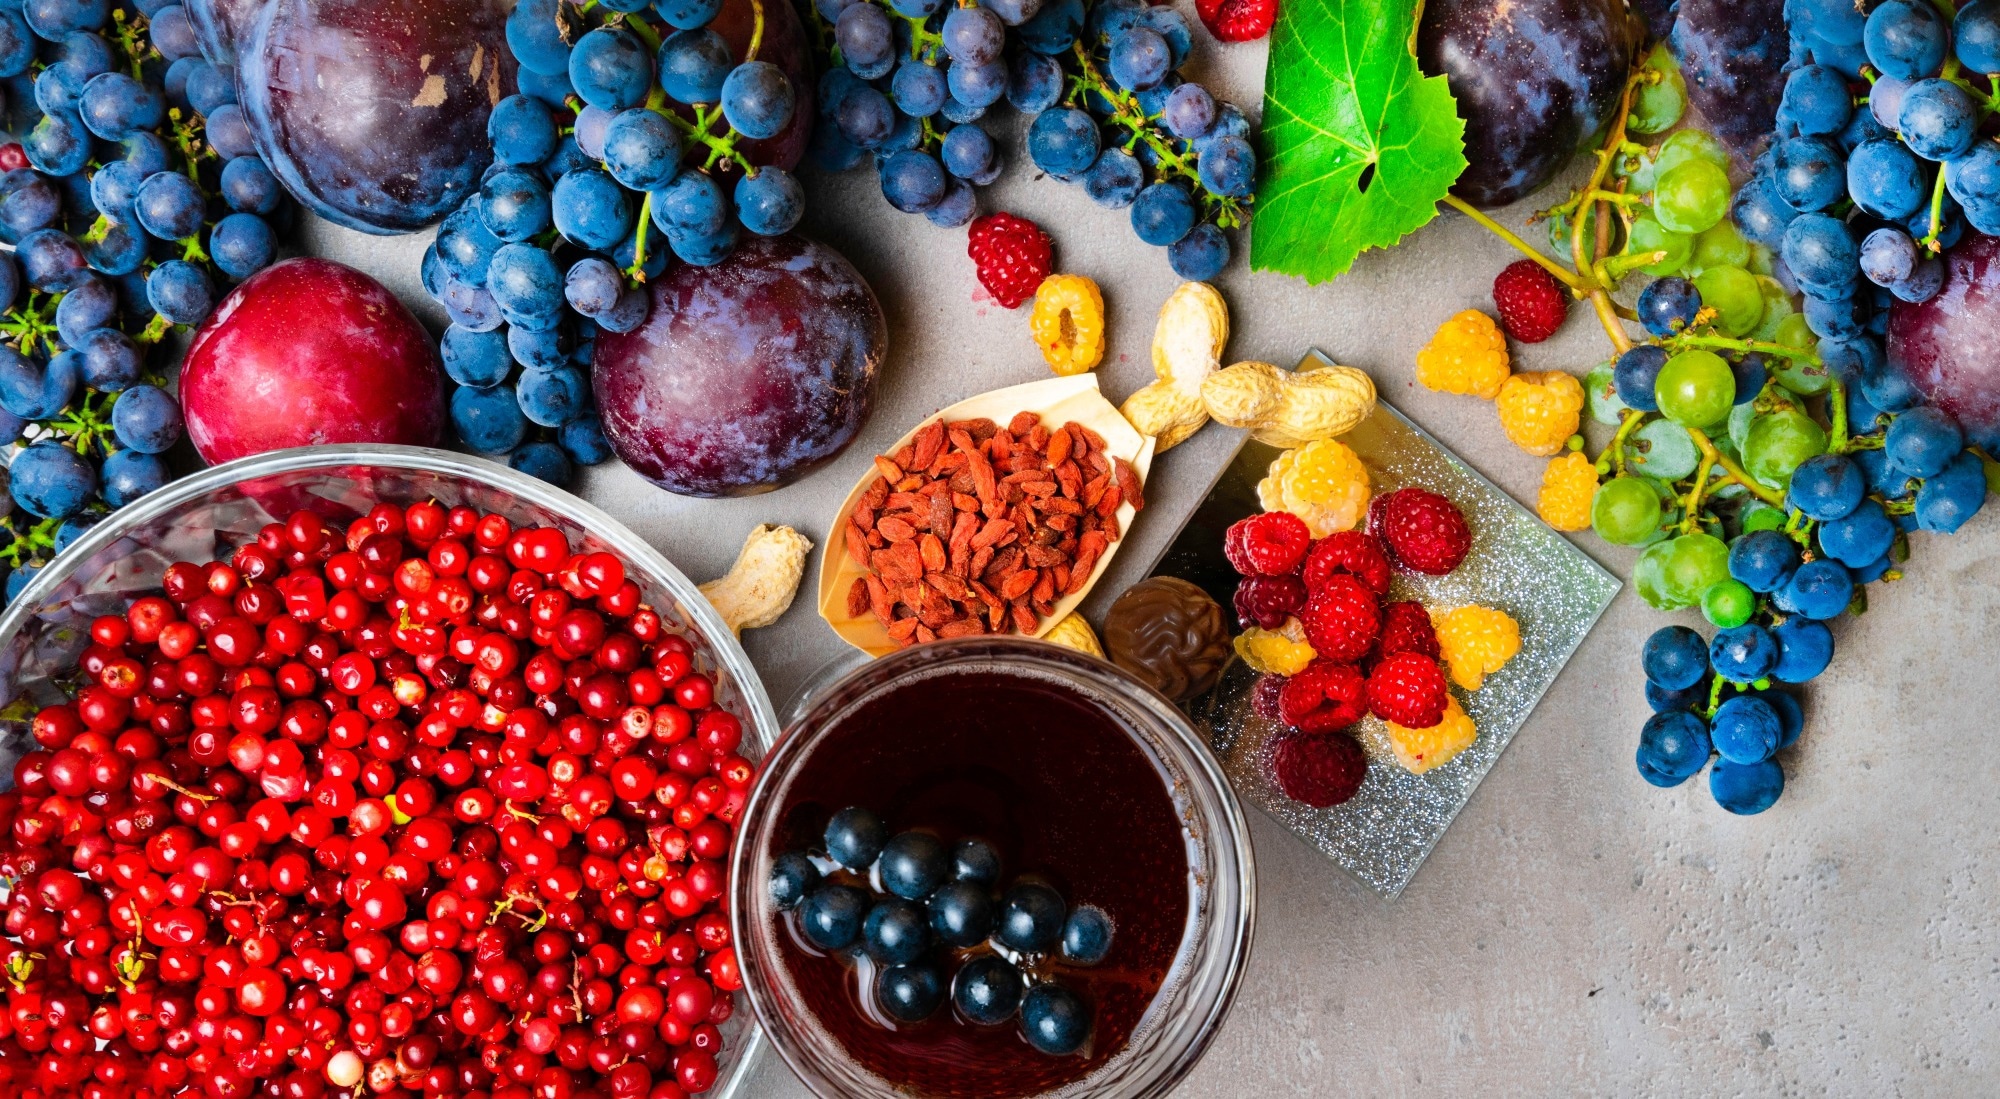 Food rich in resveratrol. Image Credit: DIVA.photo / Shutterstock